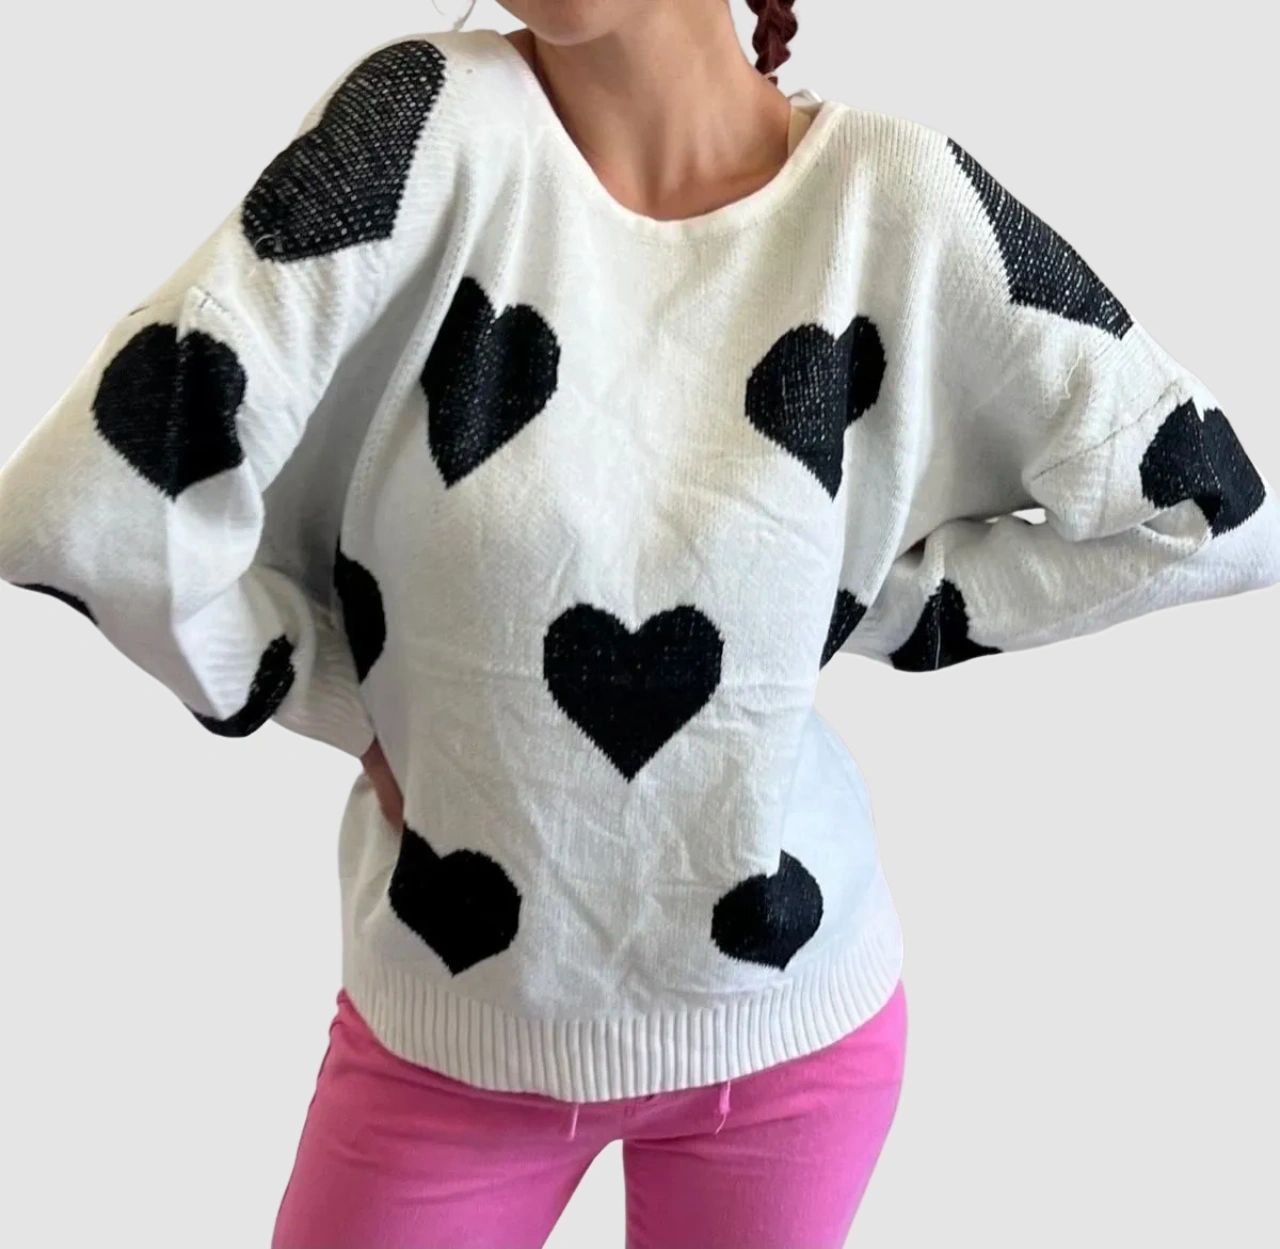 The Sweetheart Sweater ~ Keyhole Back & Black Hearts